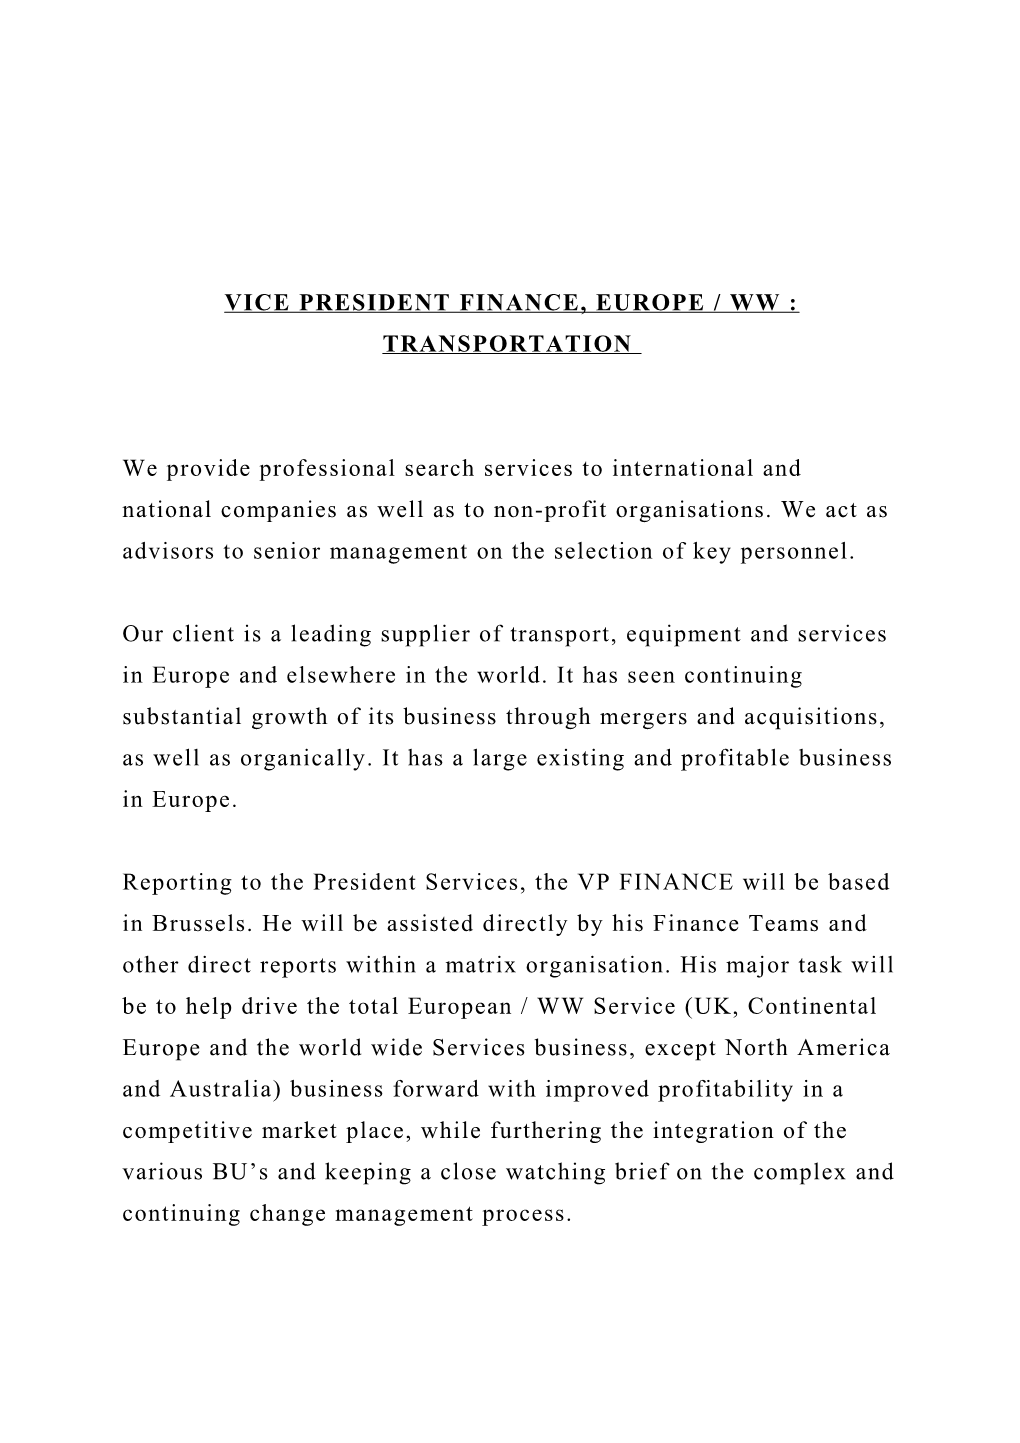 Vice President Finance, Europe / Ww : Transportation